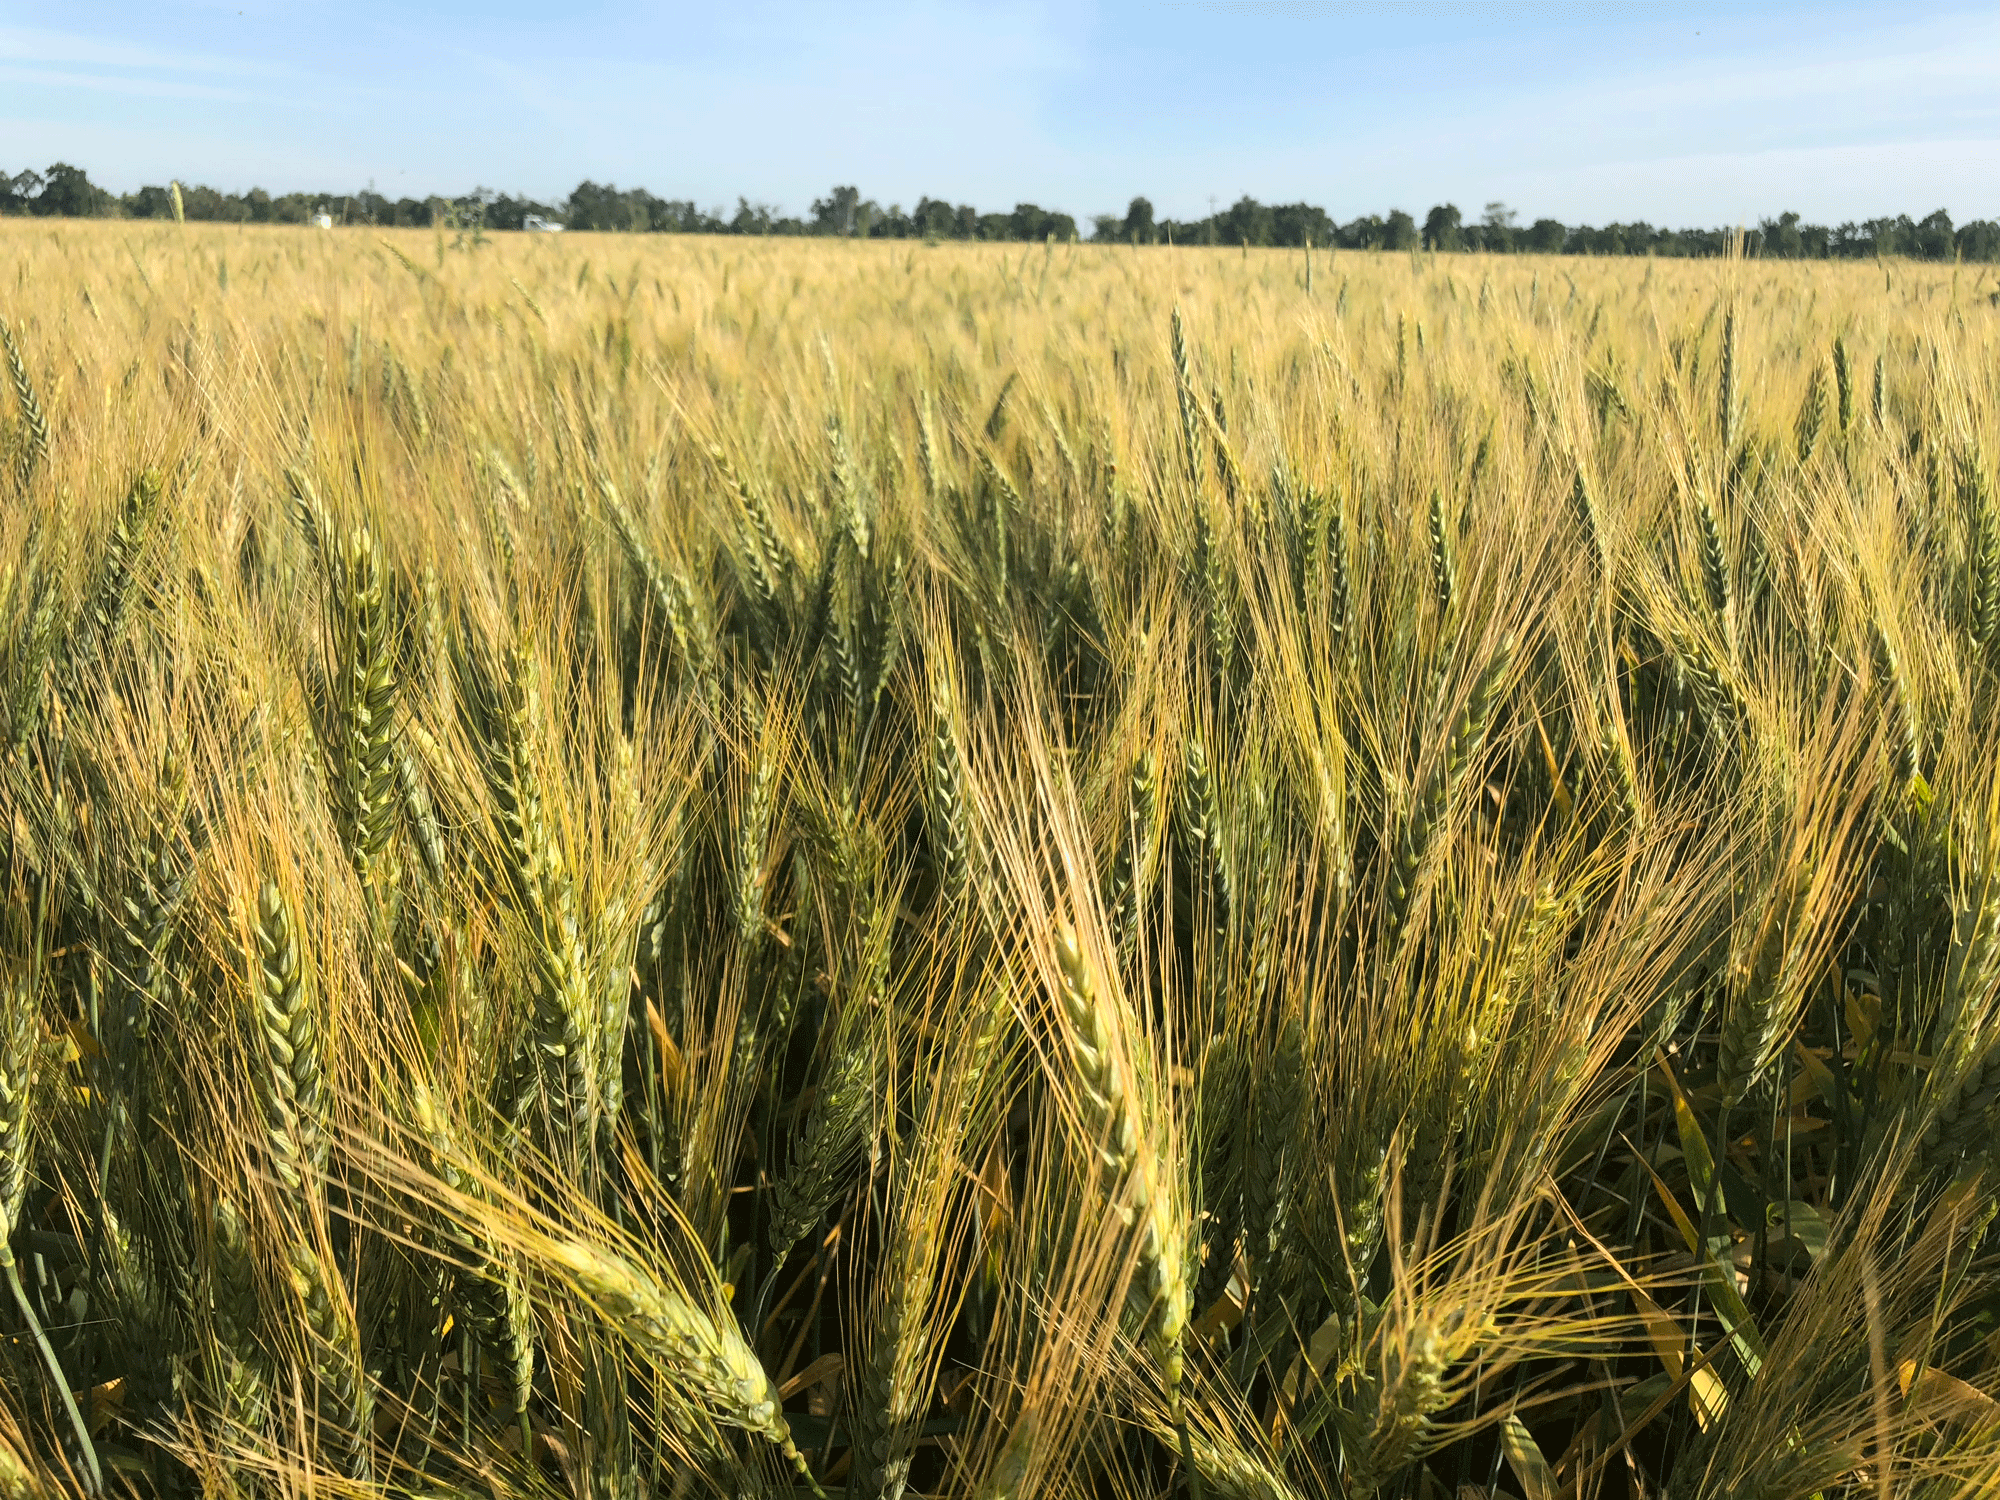 Wheat drying